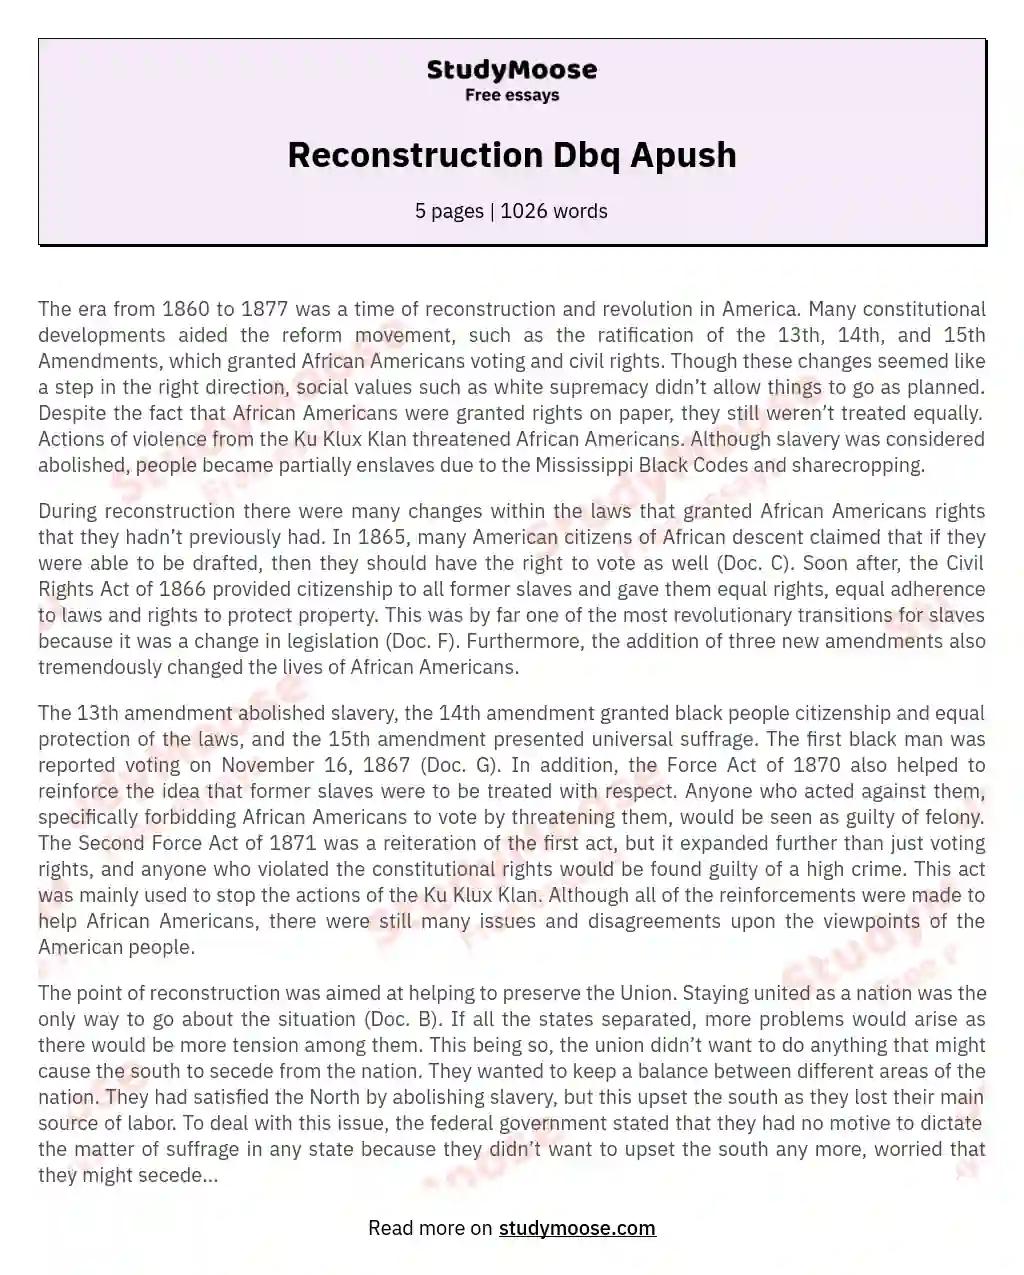 Reconstruction Dbq Apush essay